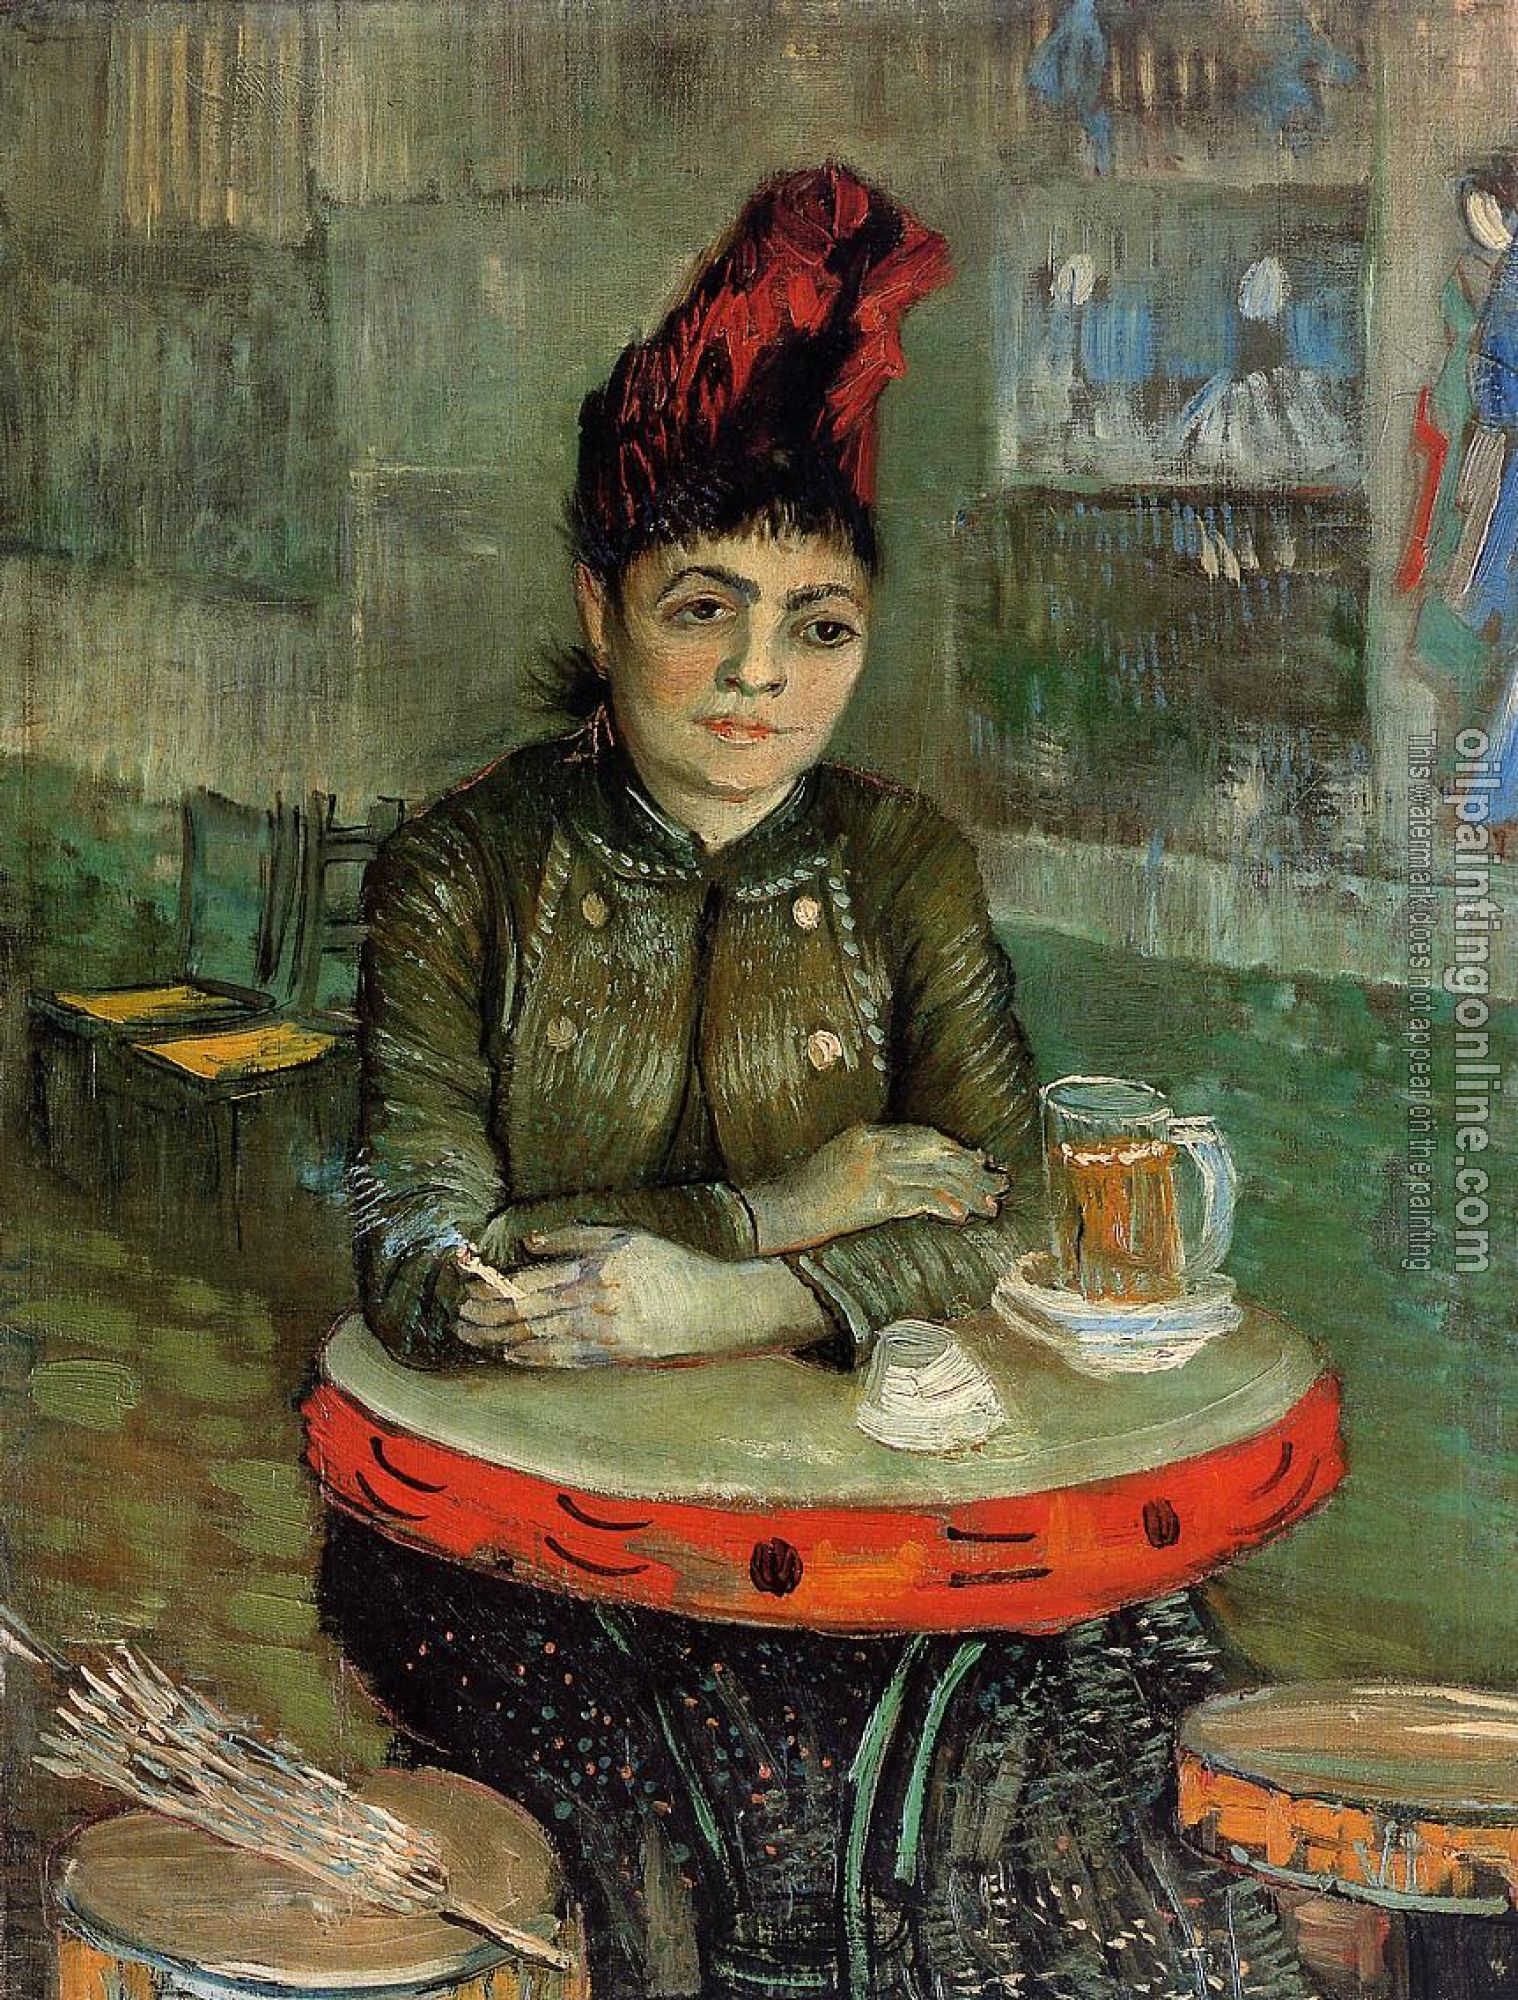 Gogh, Vincent van - Agostina Segatori Sitting in the Cafe du Tamourin